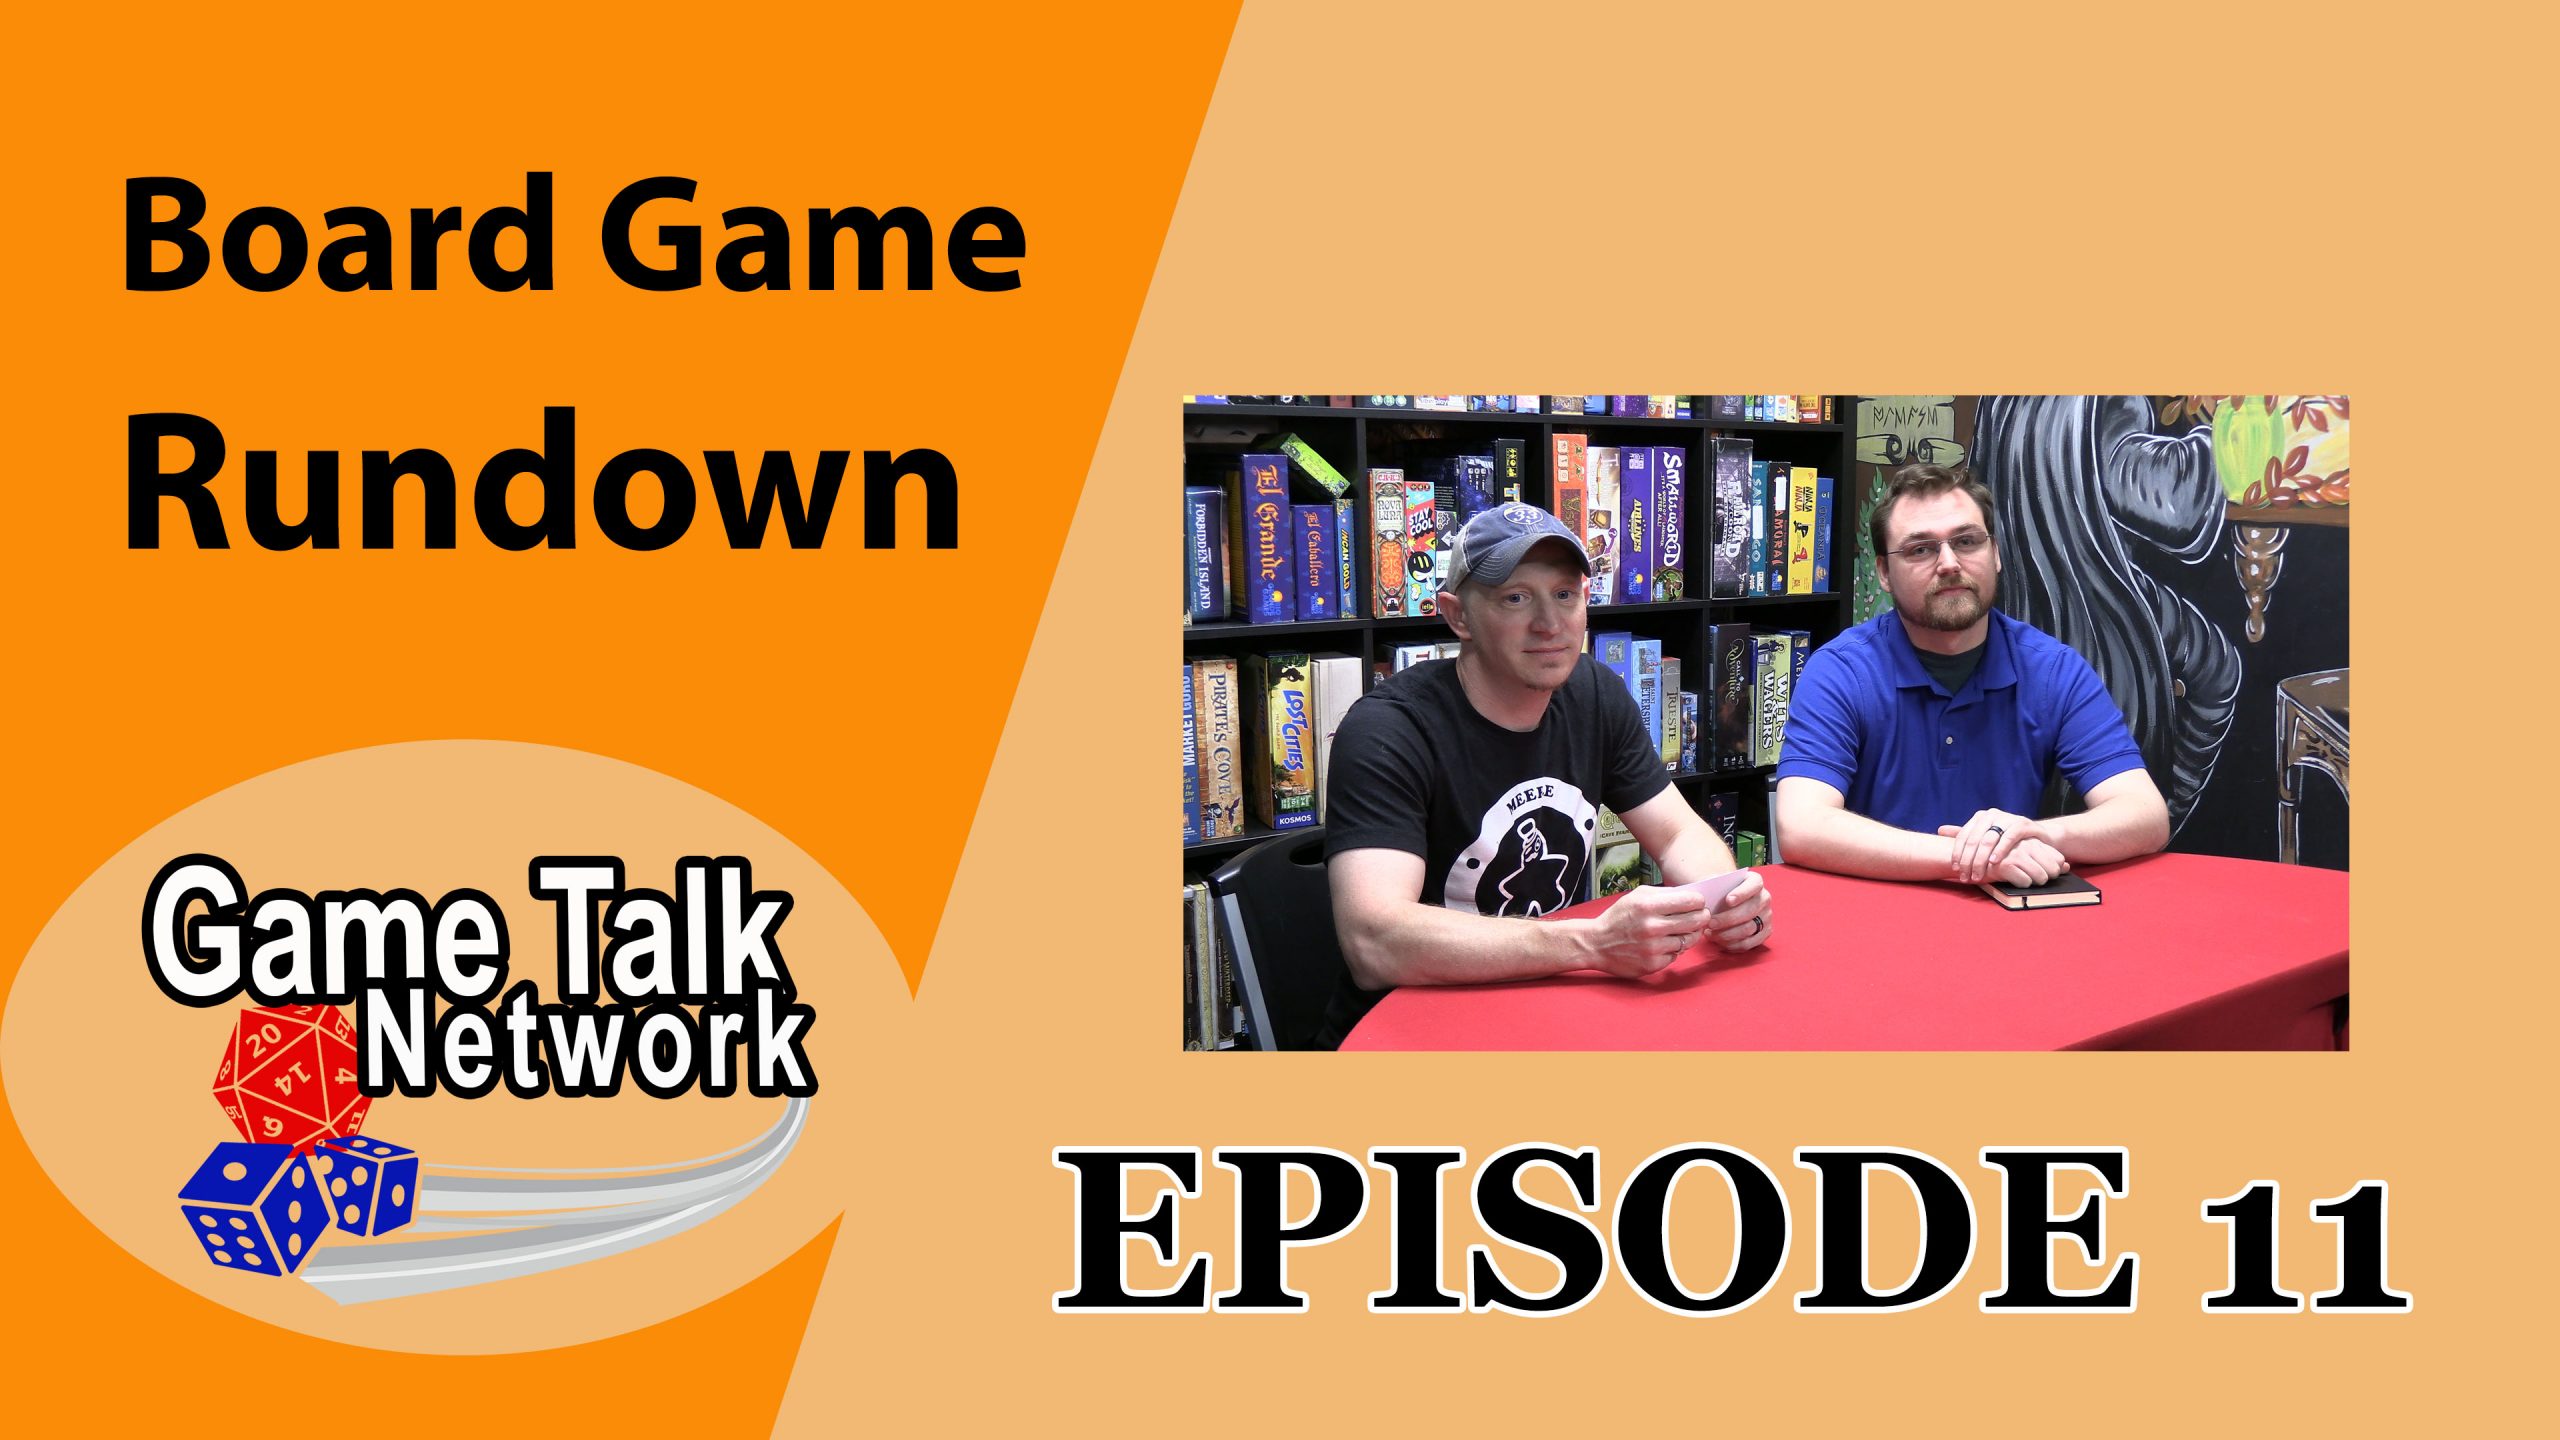 Board Game Rundown Episode 11